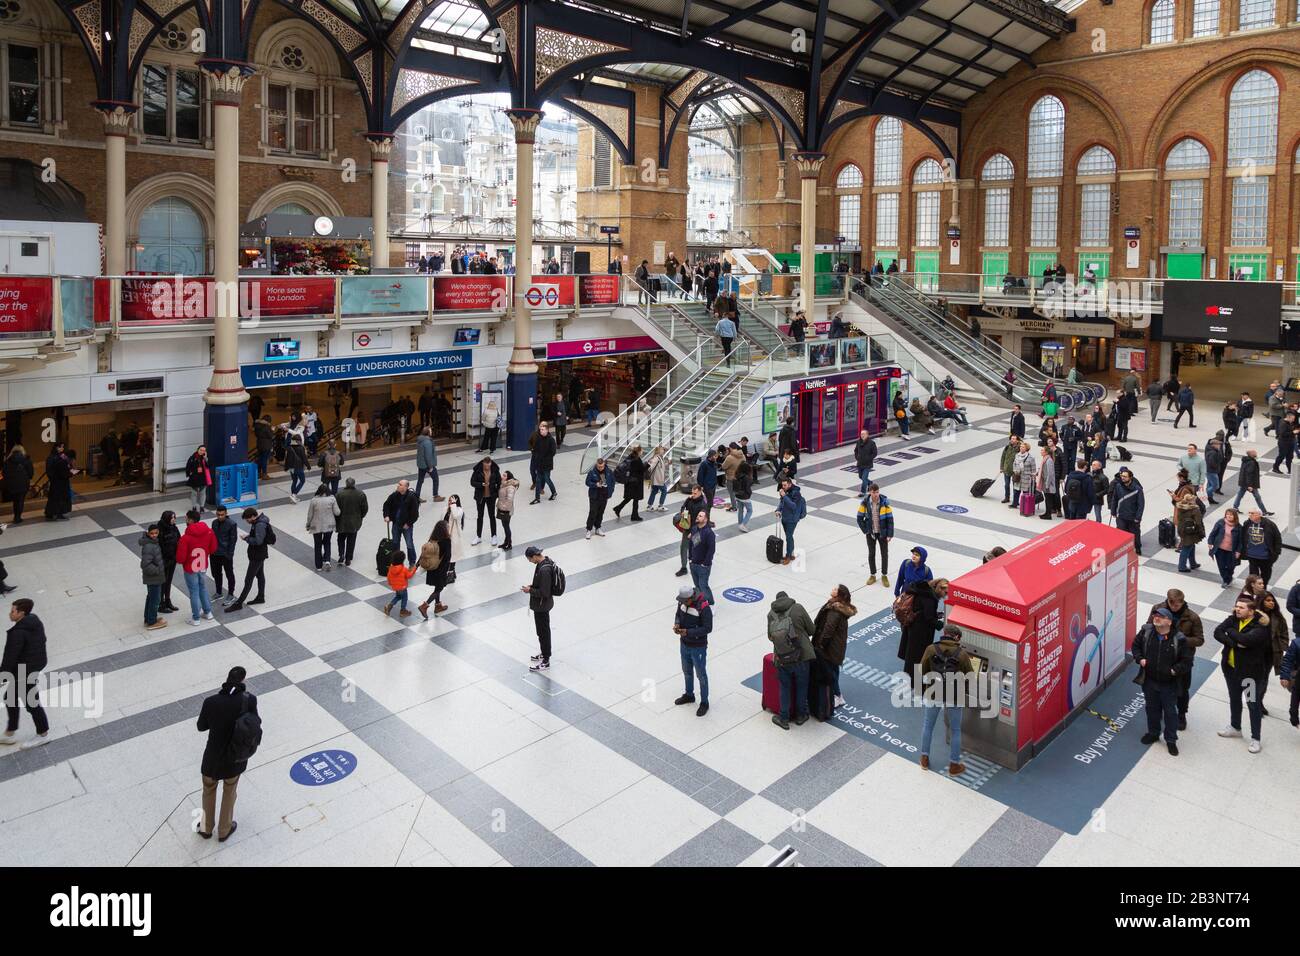 Liverpool Street Station Londra UK; stazione ferroviaria centrale e stazione ferroviaria, persone sull'atrio, Londra UK Foto Stock